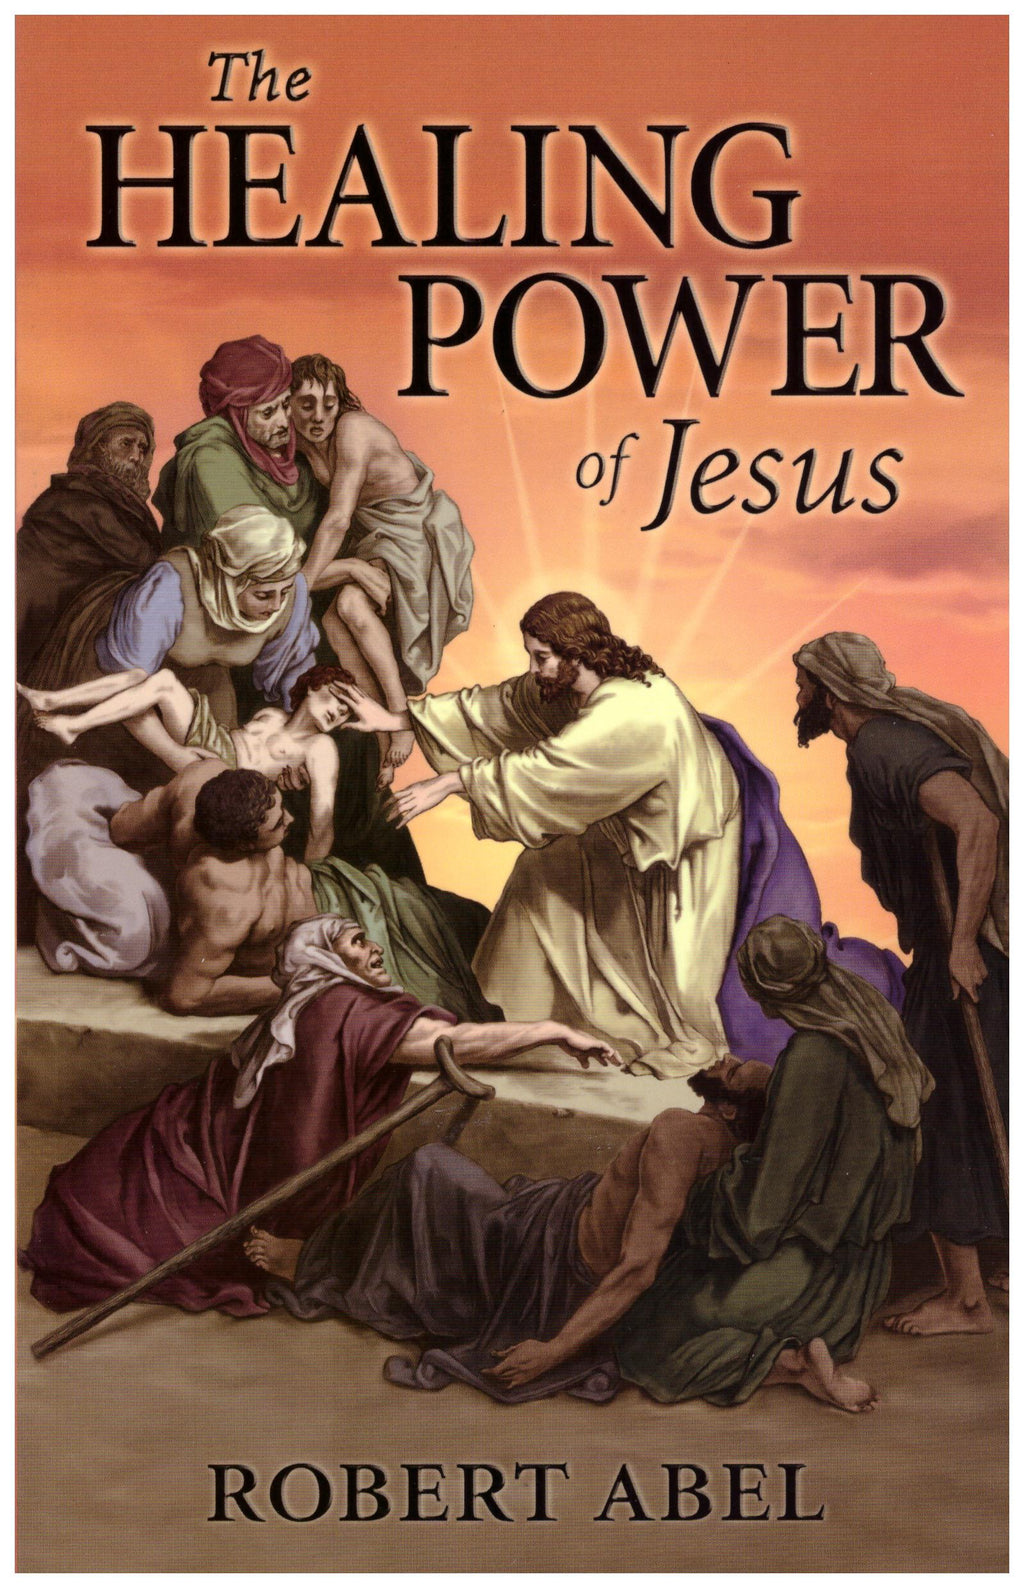 THE HEALING POWER OF JESUS